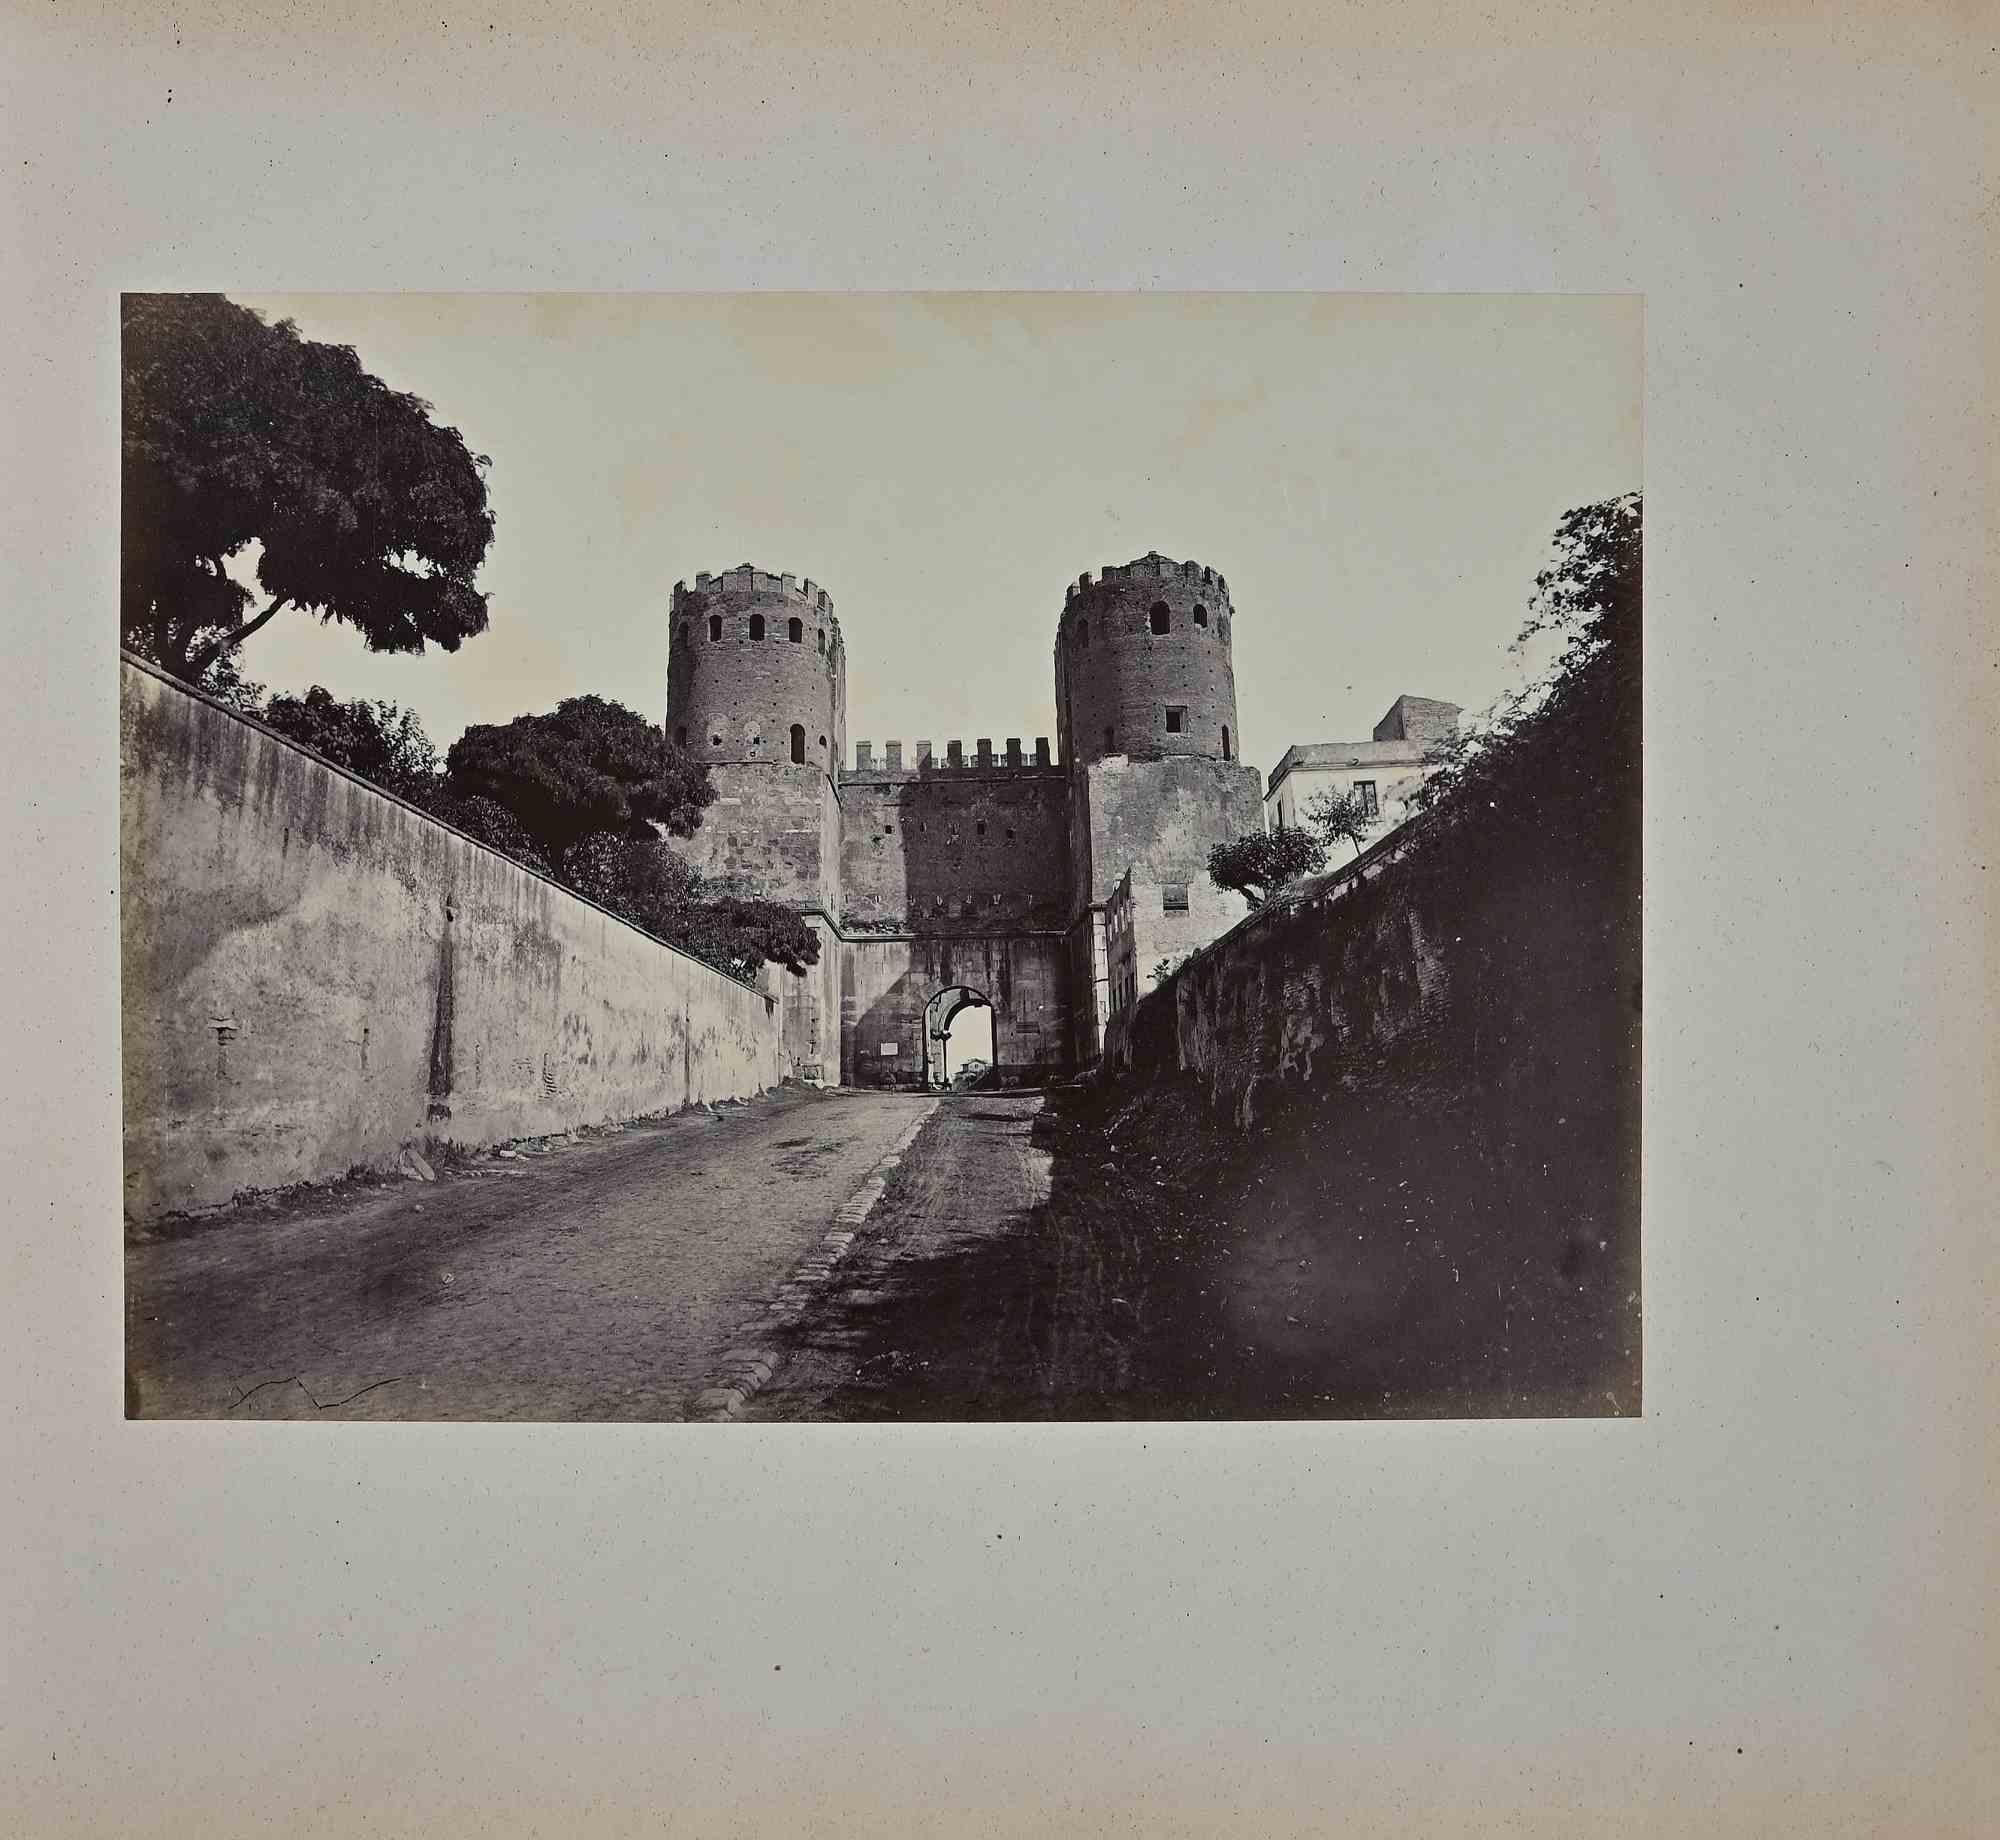 Francesco Sidoli Landscape Photograph - Ancient View of Via Appia Antica - Photograph by F. Sidoli - 19th Century